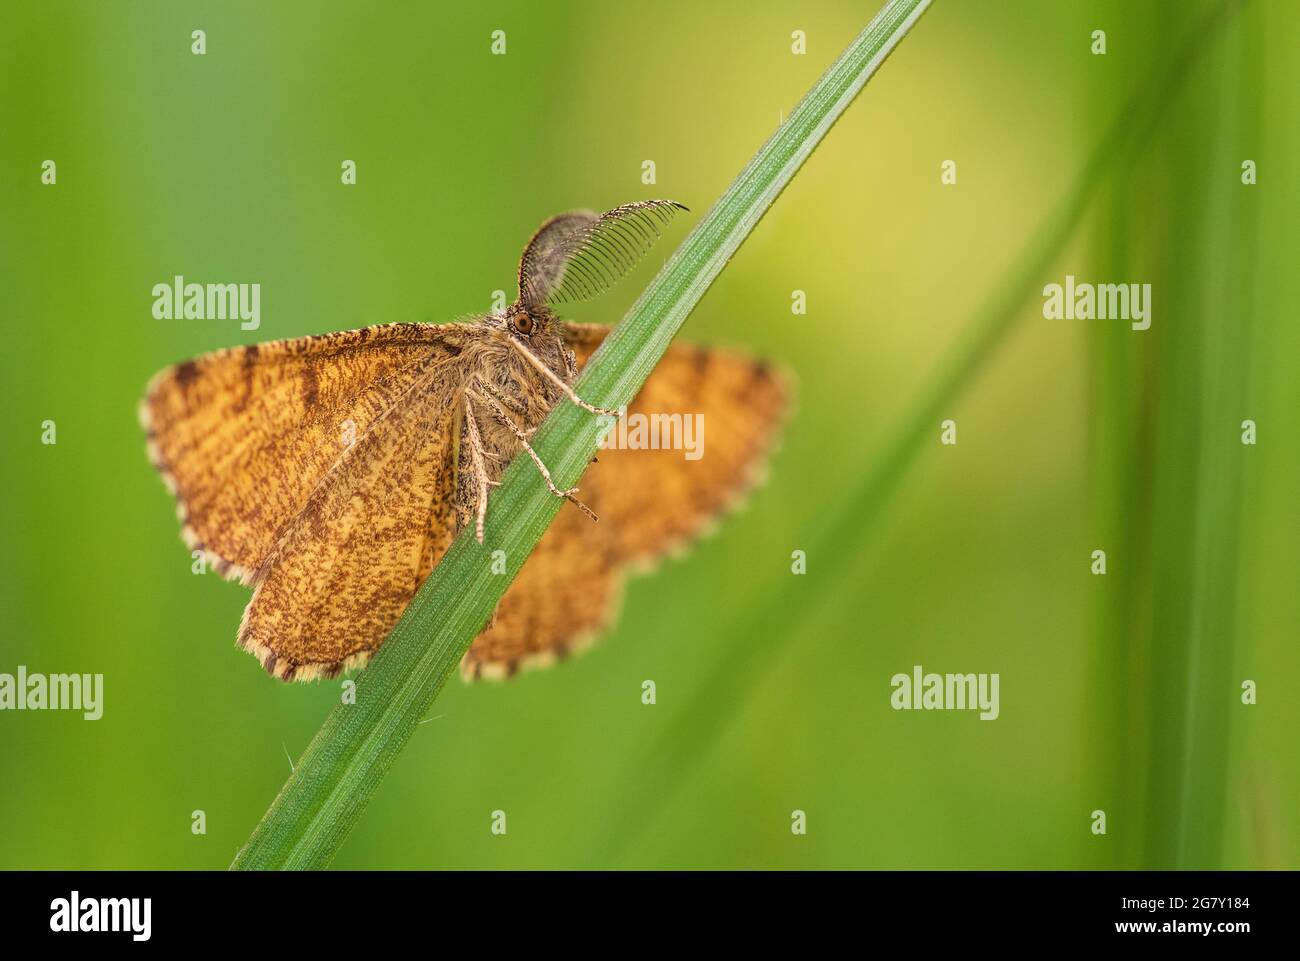 Common Heath moth - Ematurga atomaria, common brown moth from European meadows and grasslands, White Caprathians, Czech Republic. Stock Photo